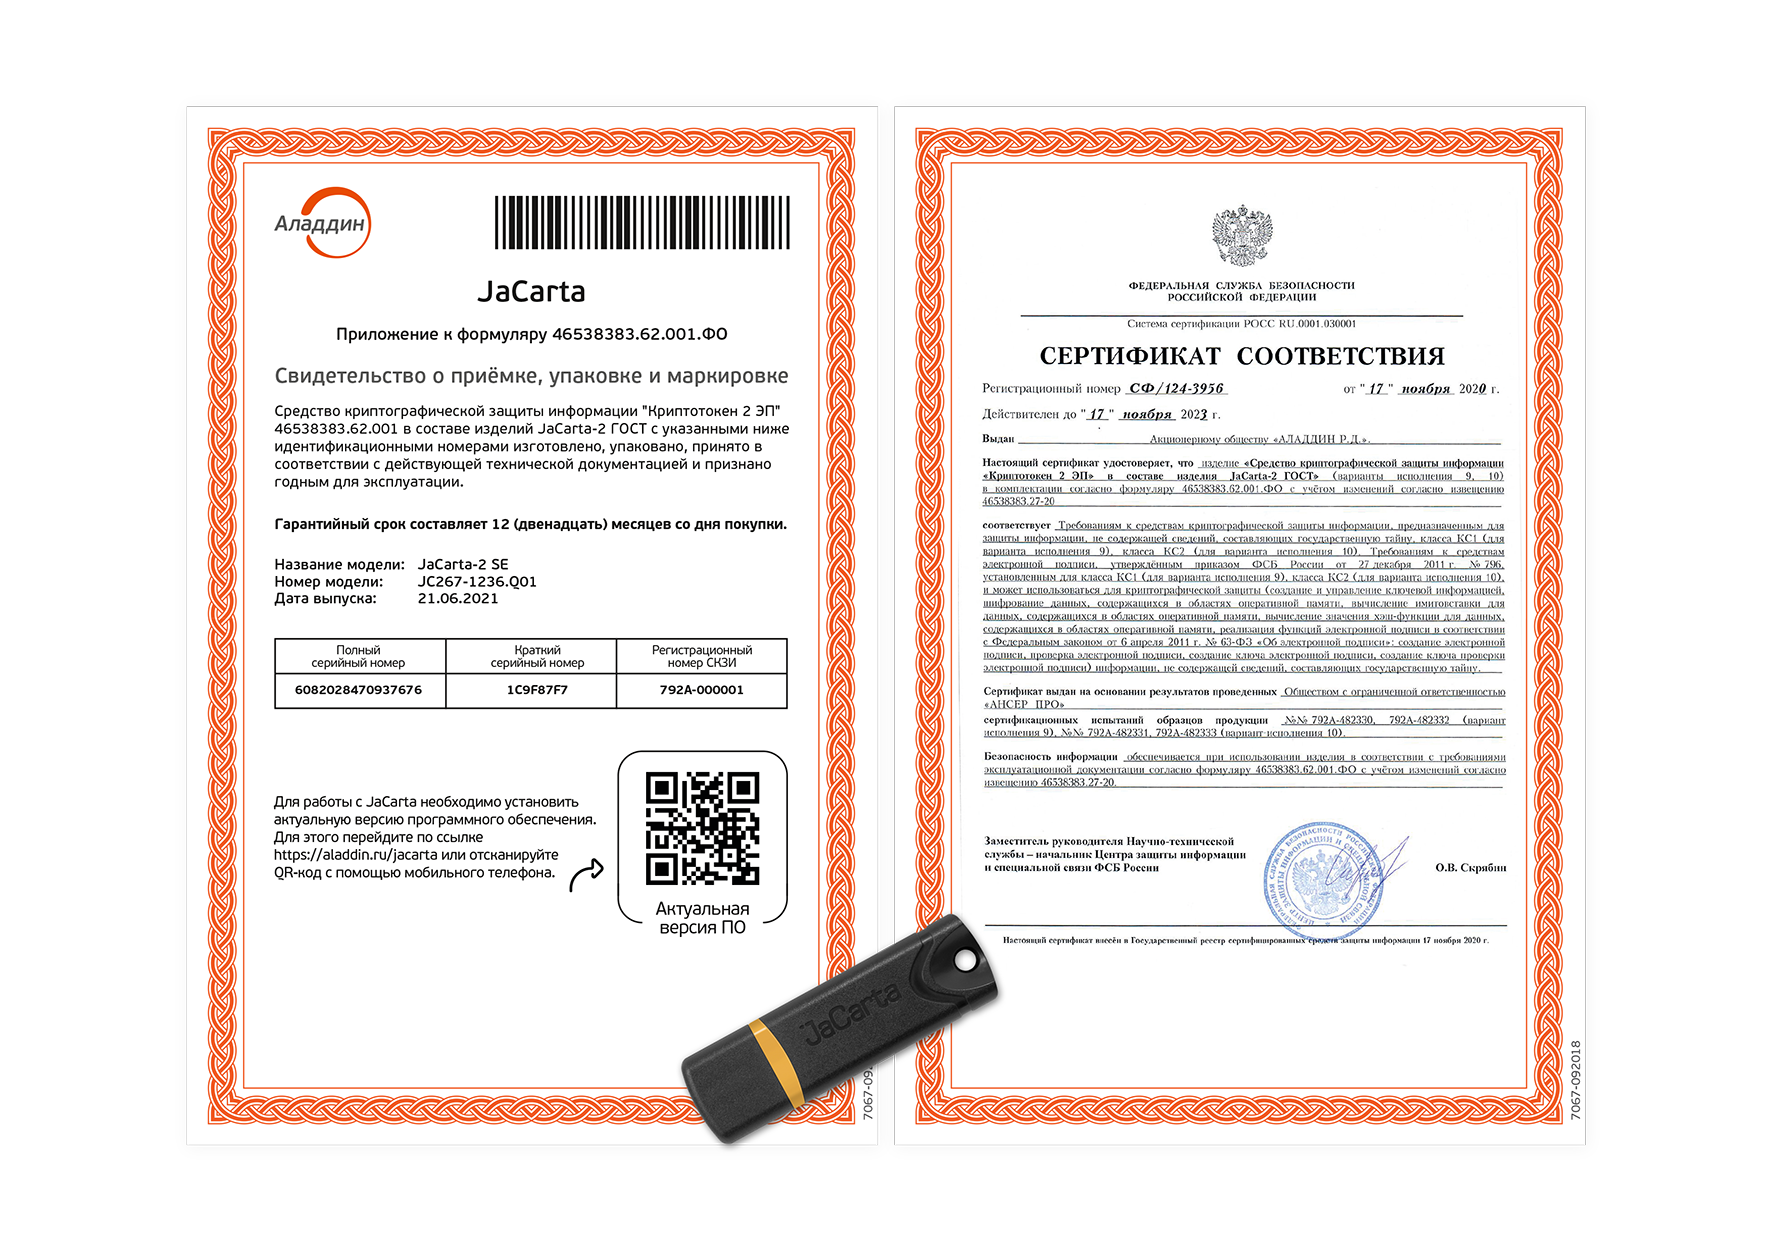 USB-токен Jacarta PKI. Сертификат ФСТЭК. Сертификат электронной подписи. Сертификат соответствия электронной подписи. Сертификат подписи ЭЦП.